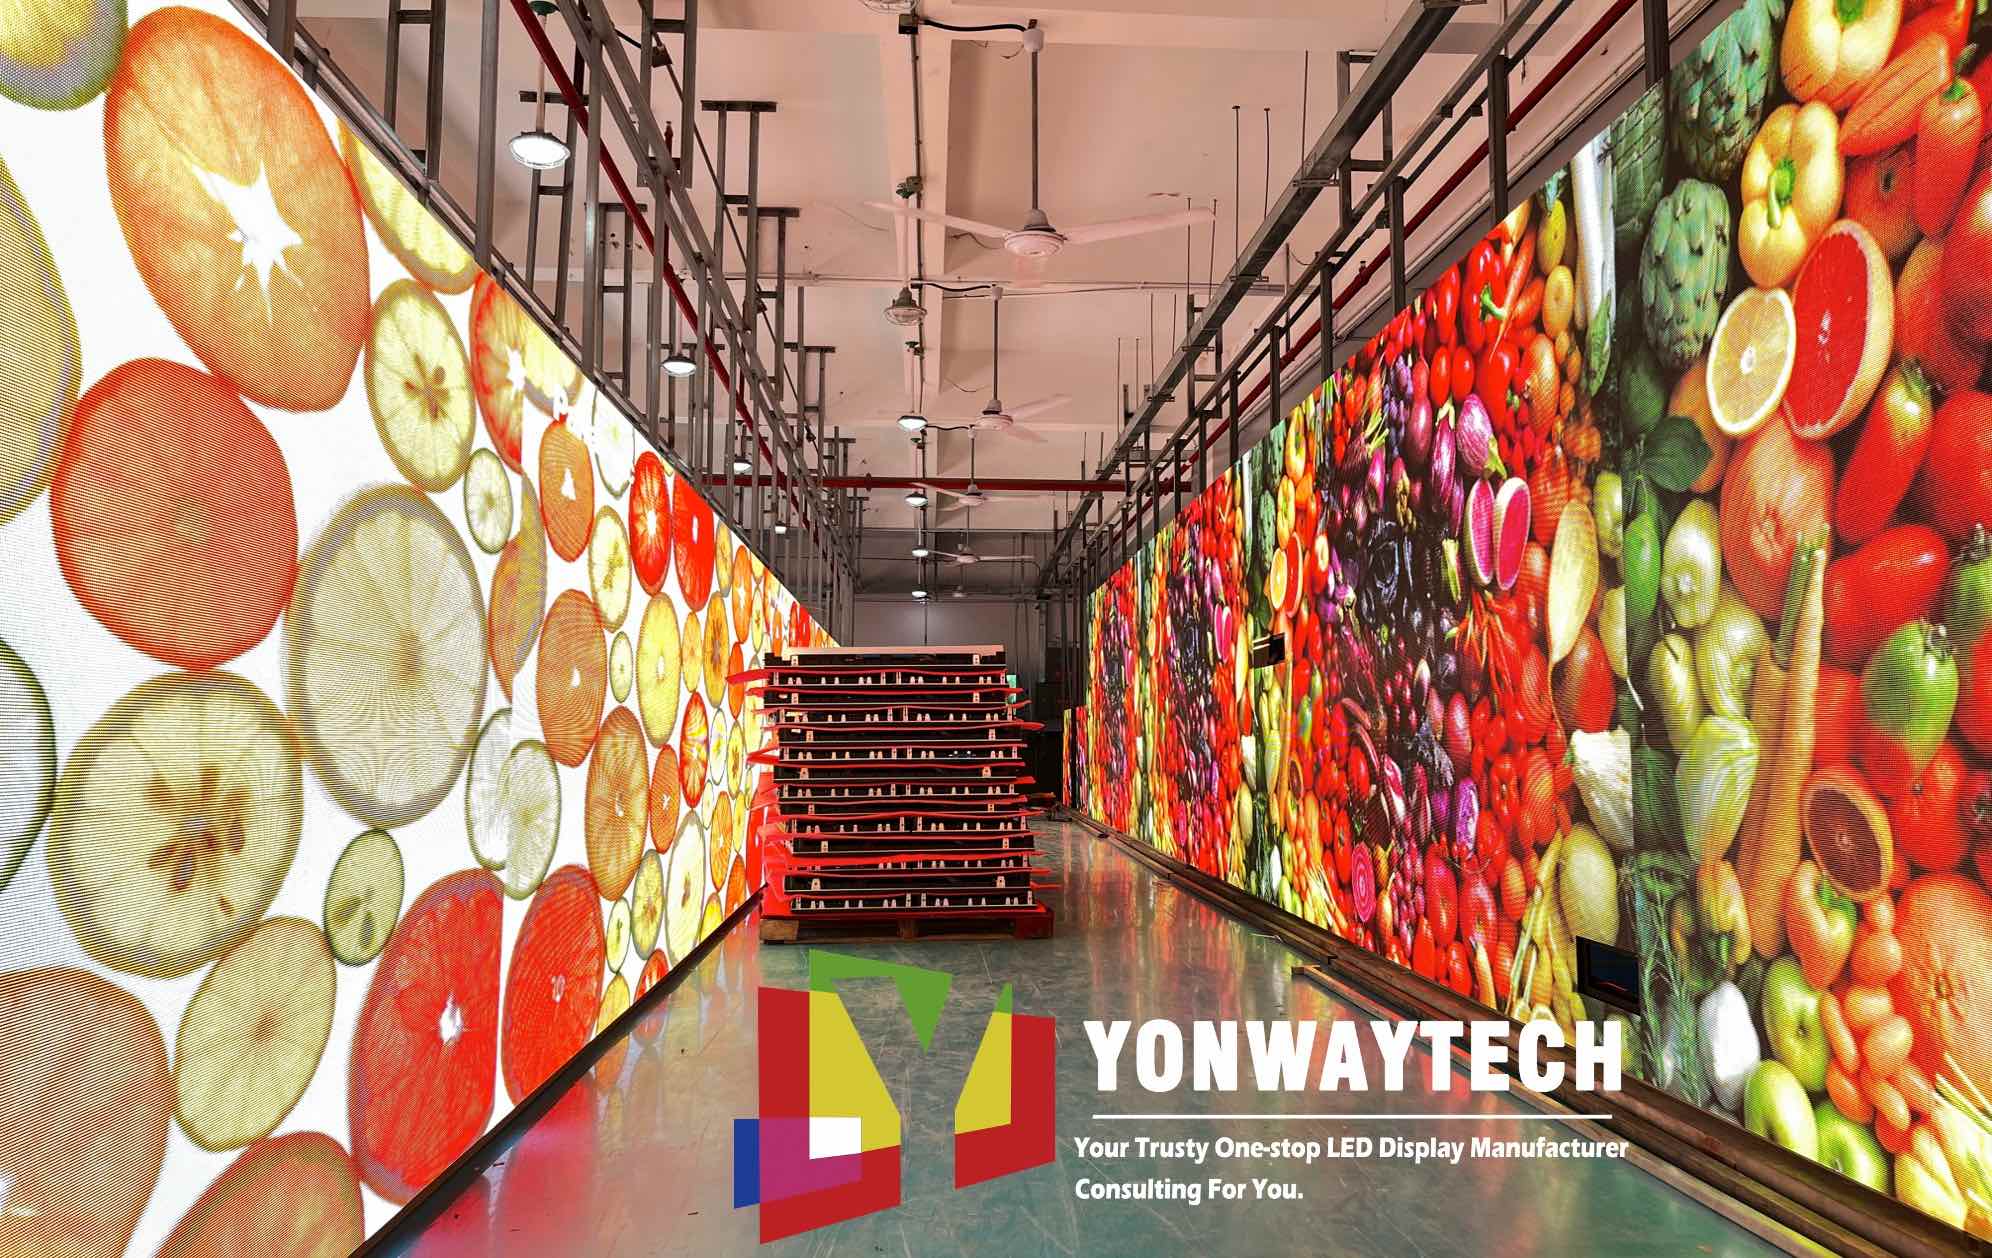 www.yonwaytech.com